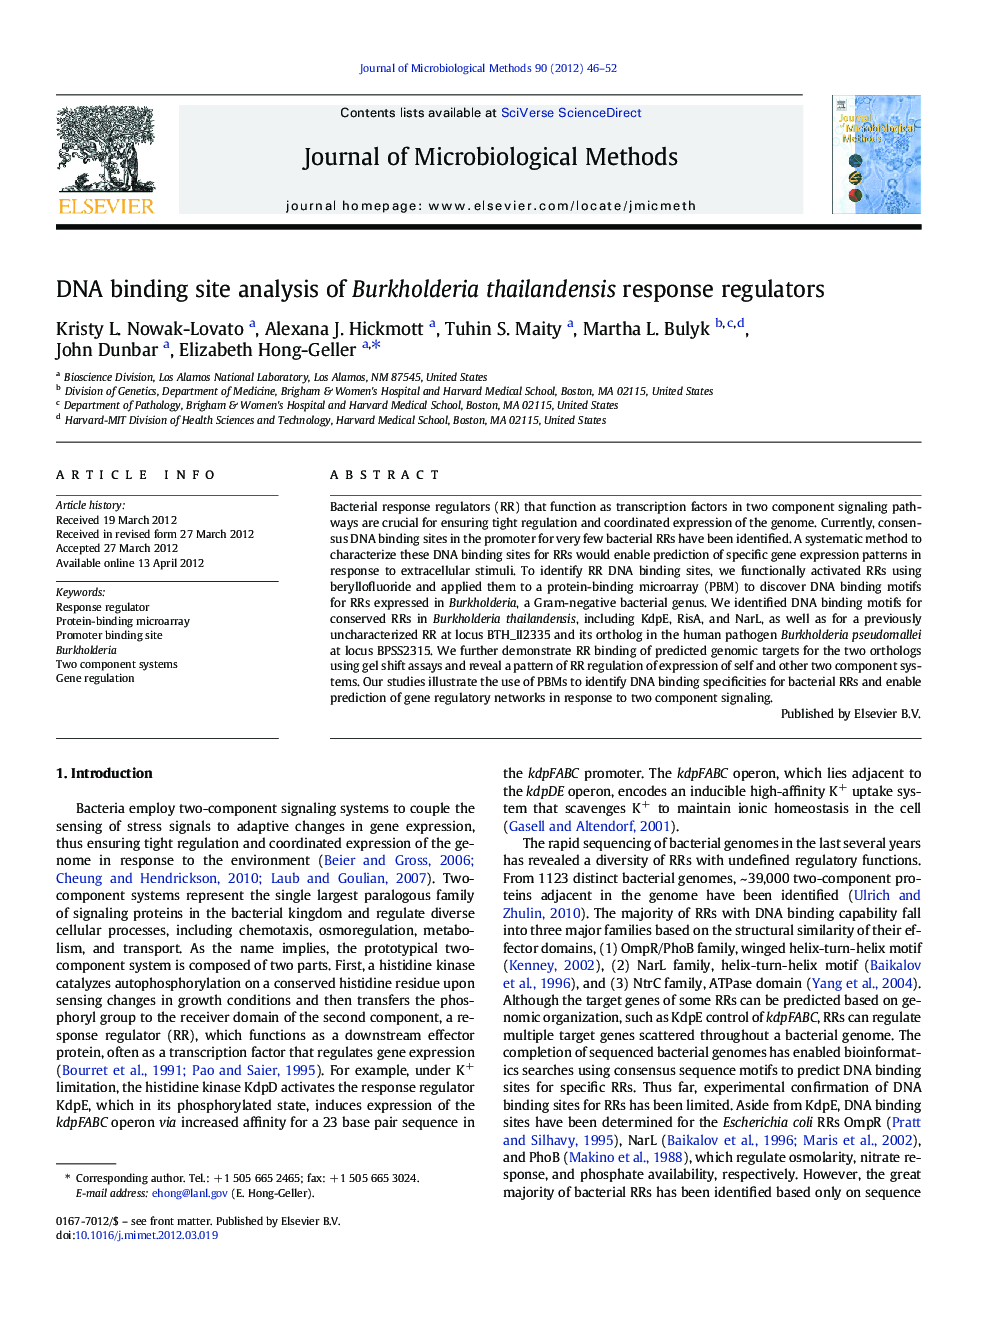 DNA binding site analysis of Burkholderia thailandensis response regulators